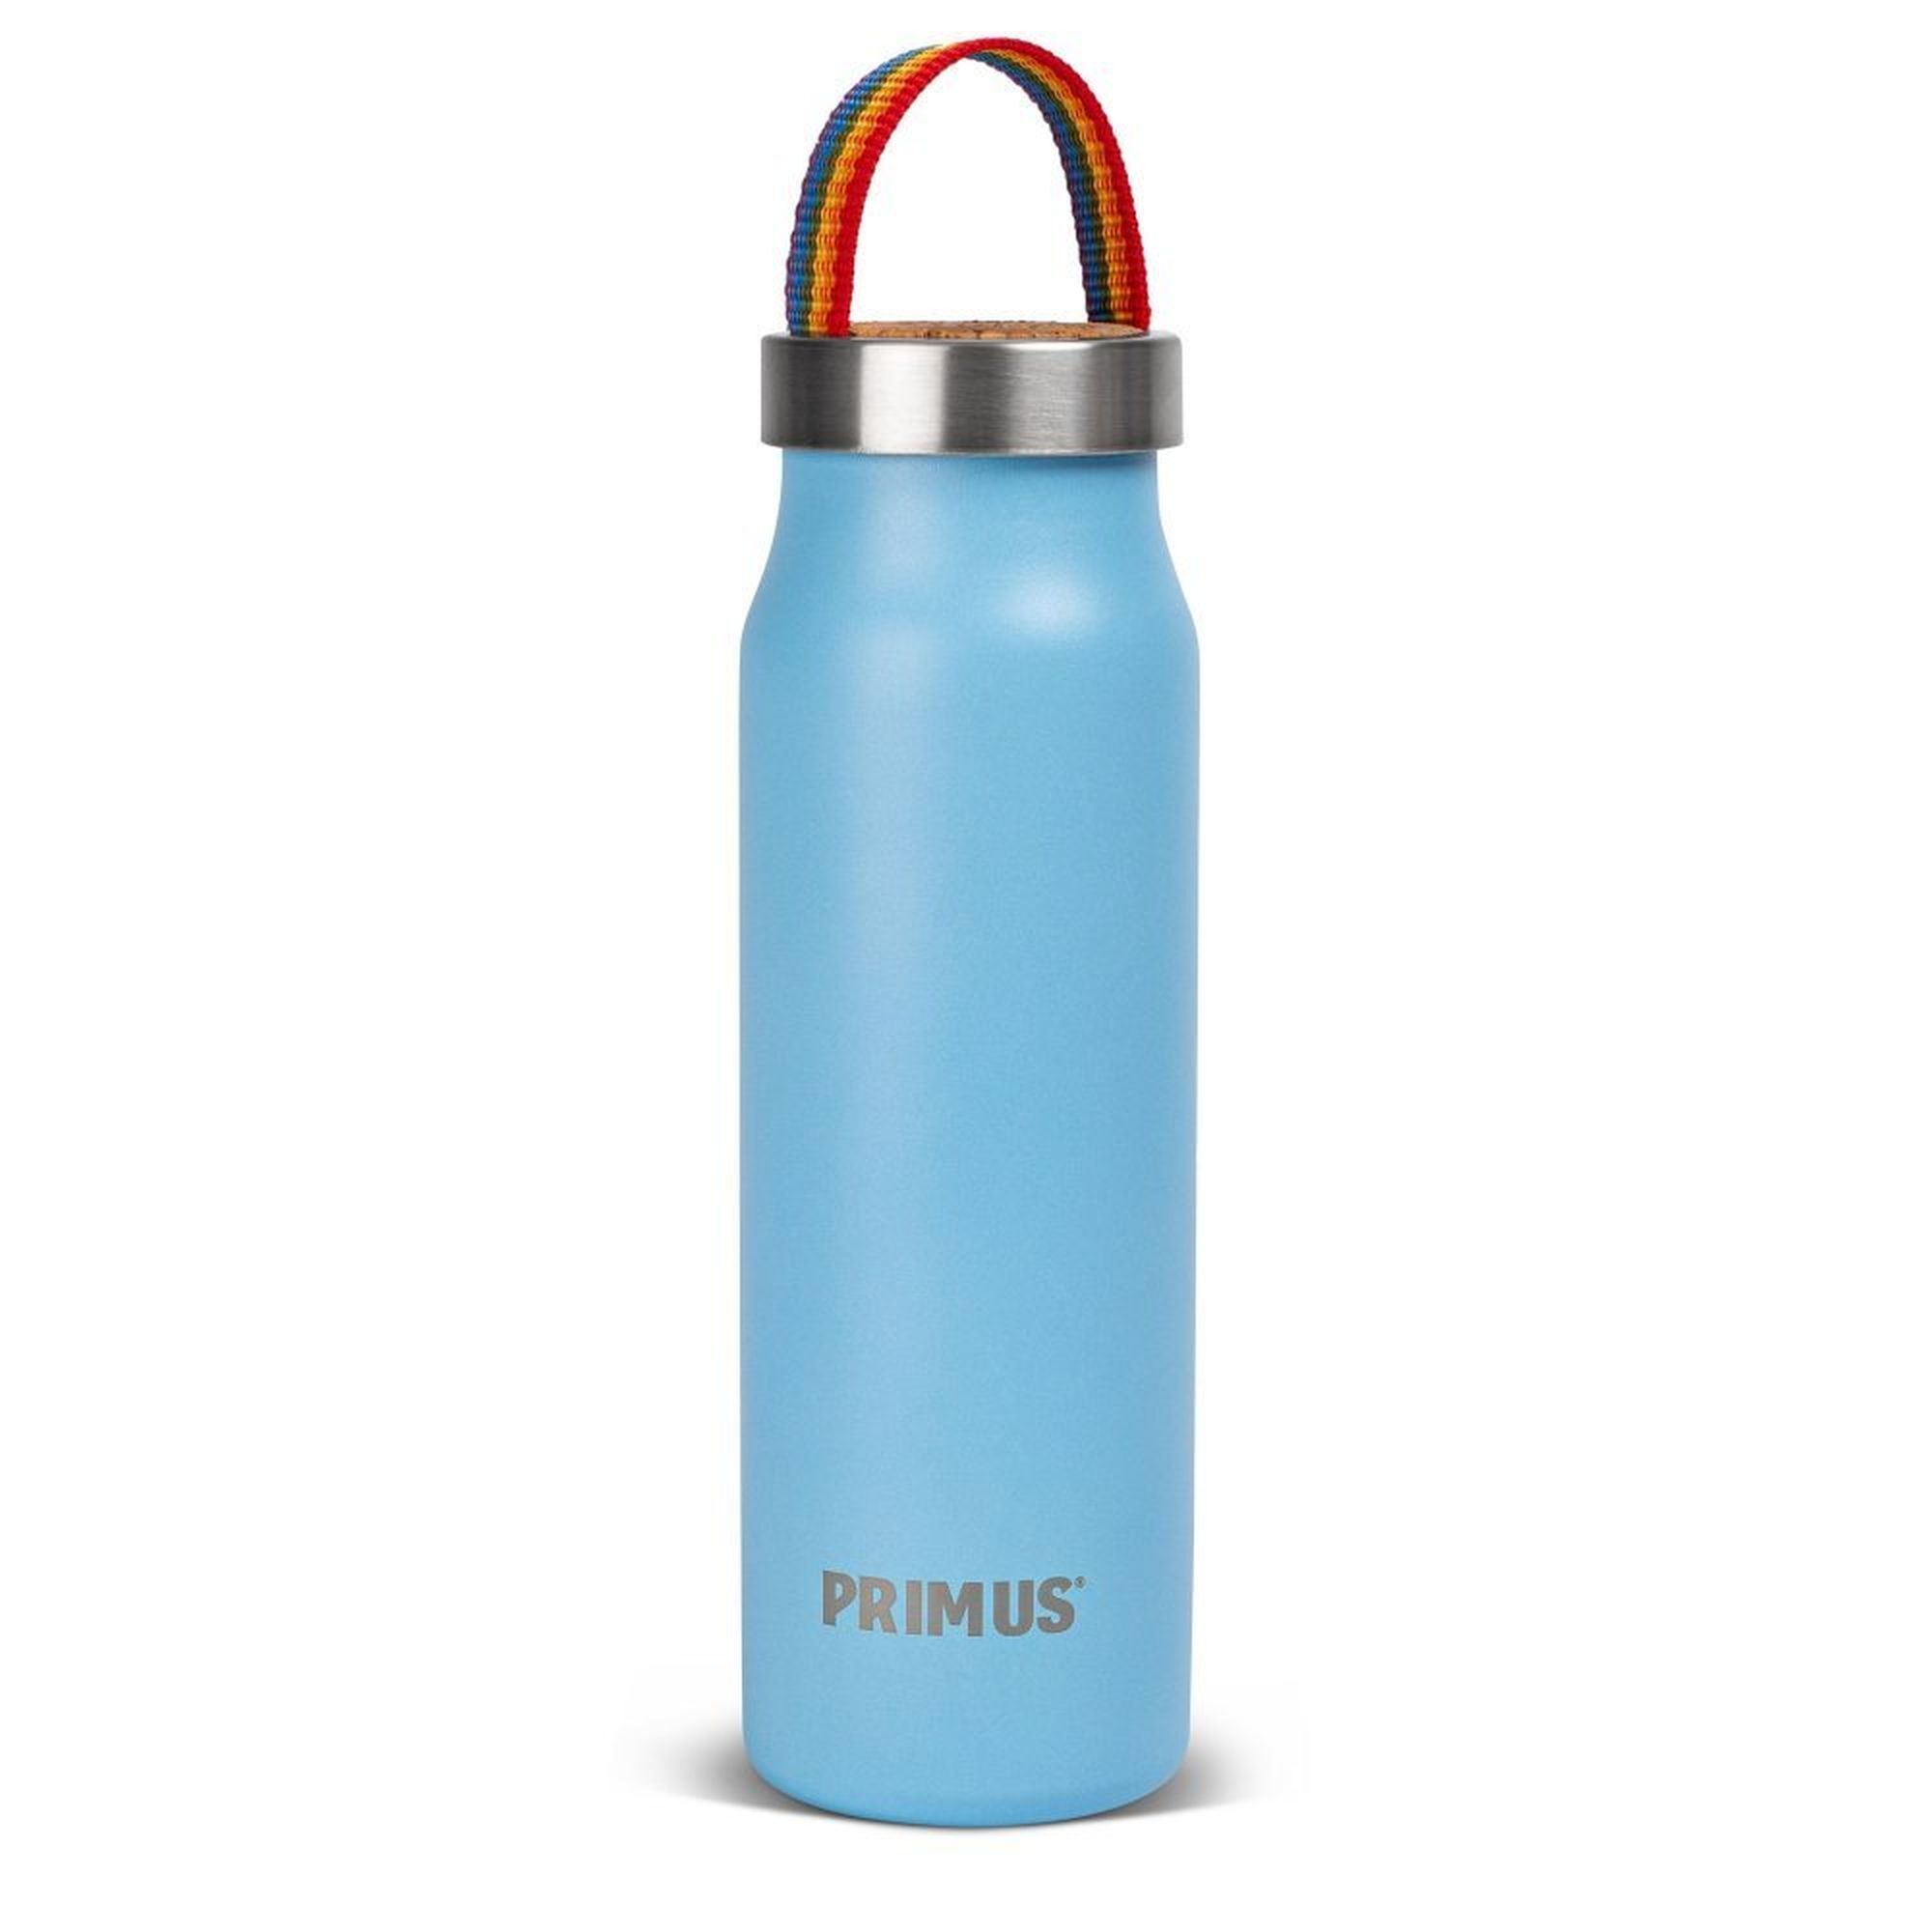 Primus Klunken Vacuum Bottle 0.5L - Termoflaske